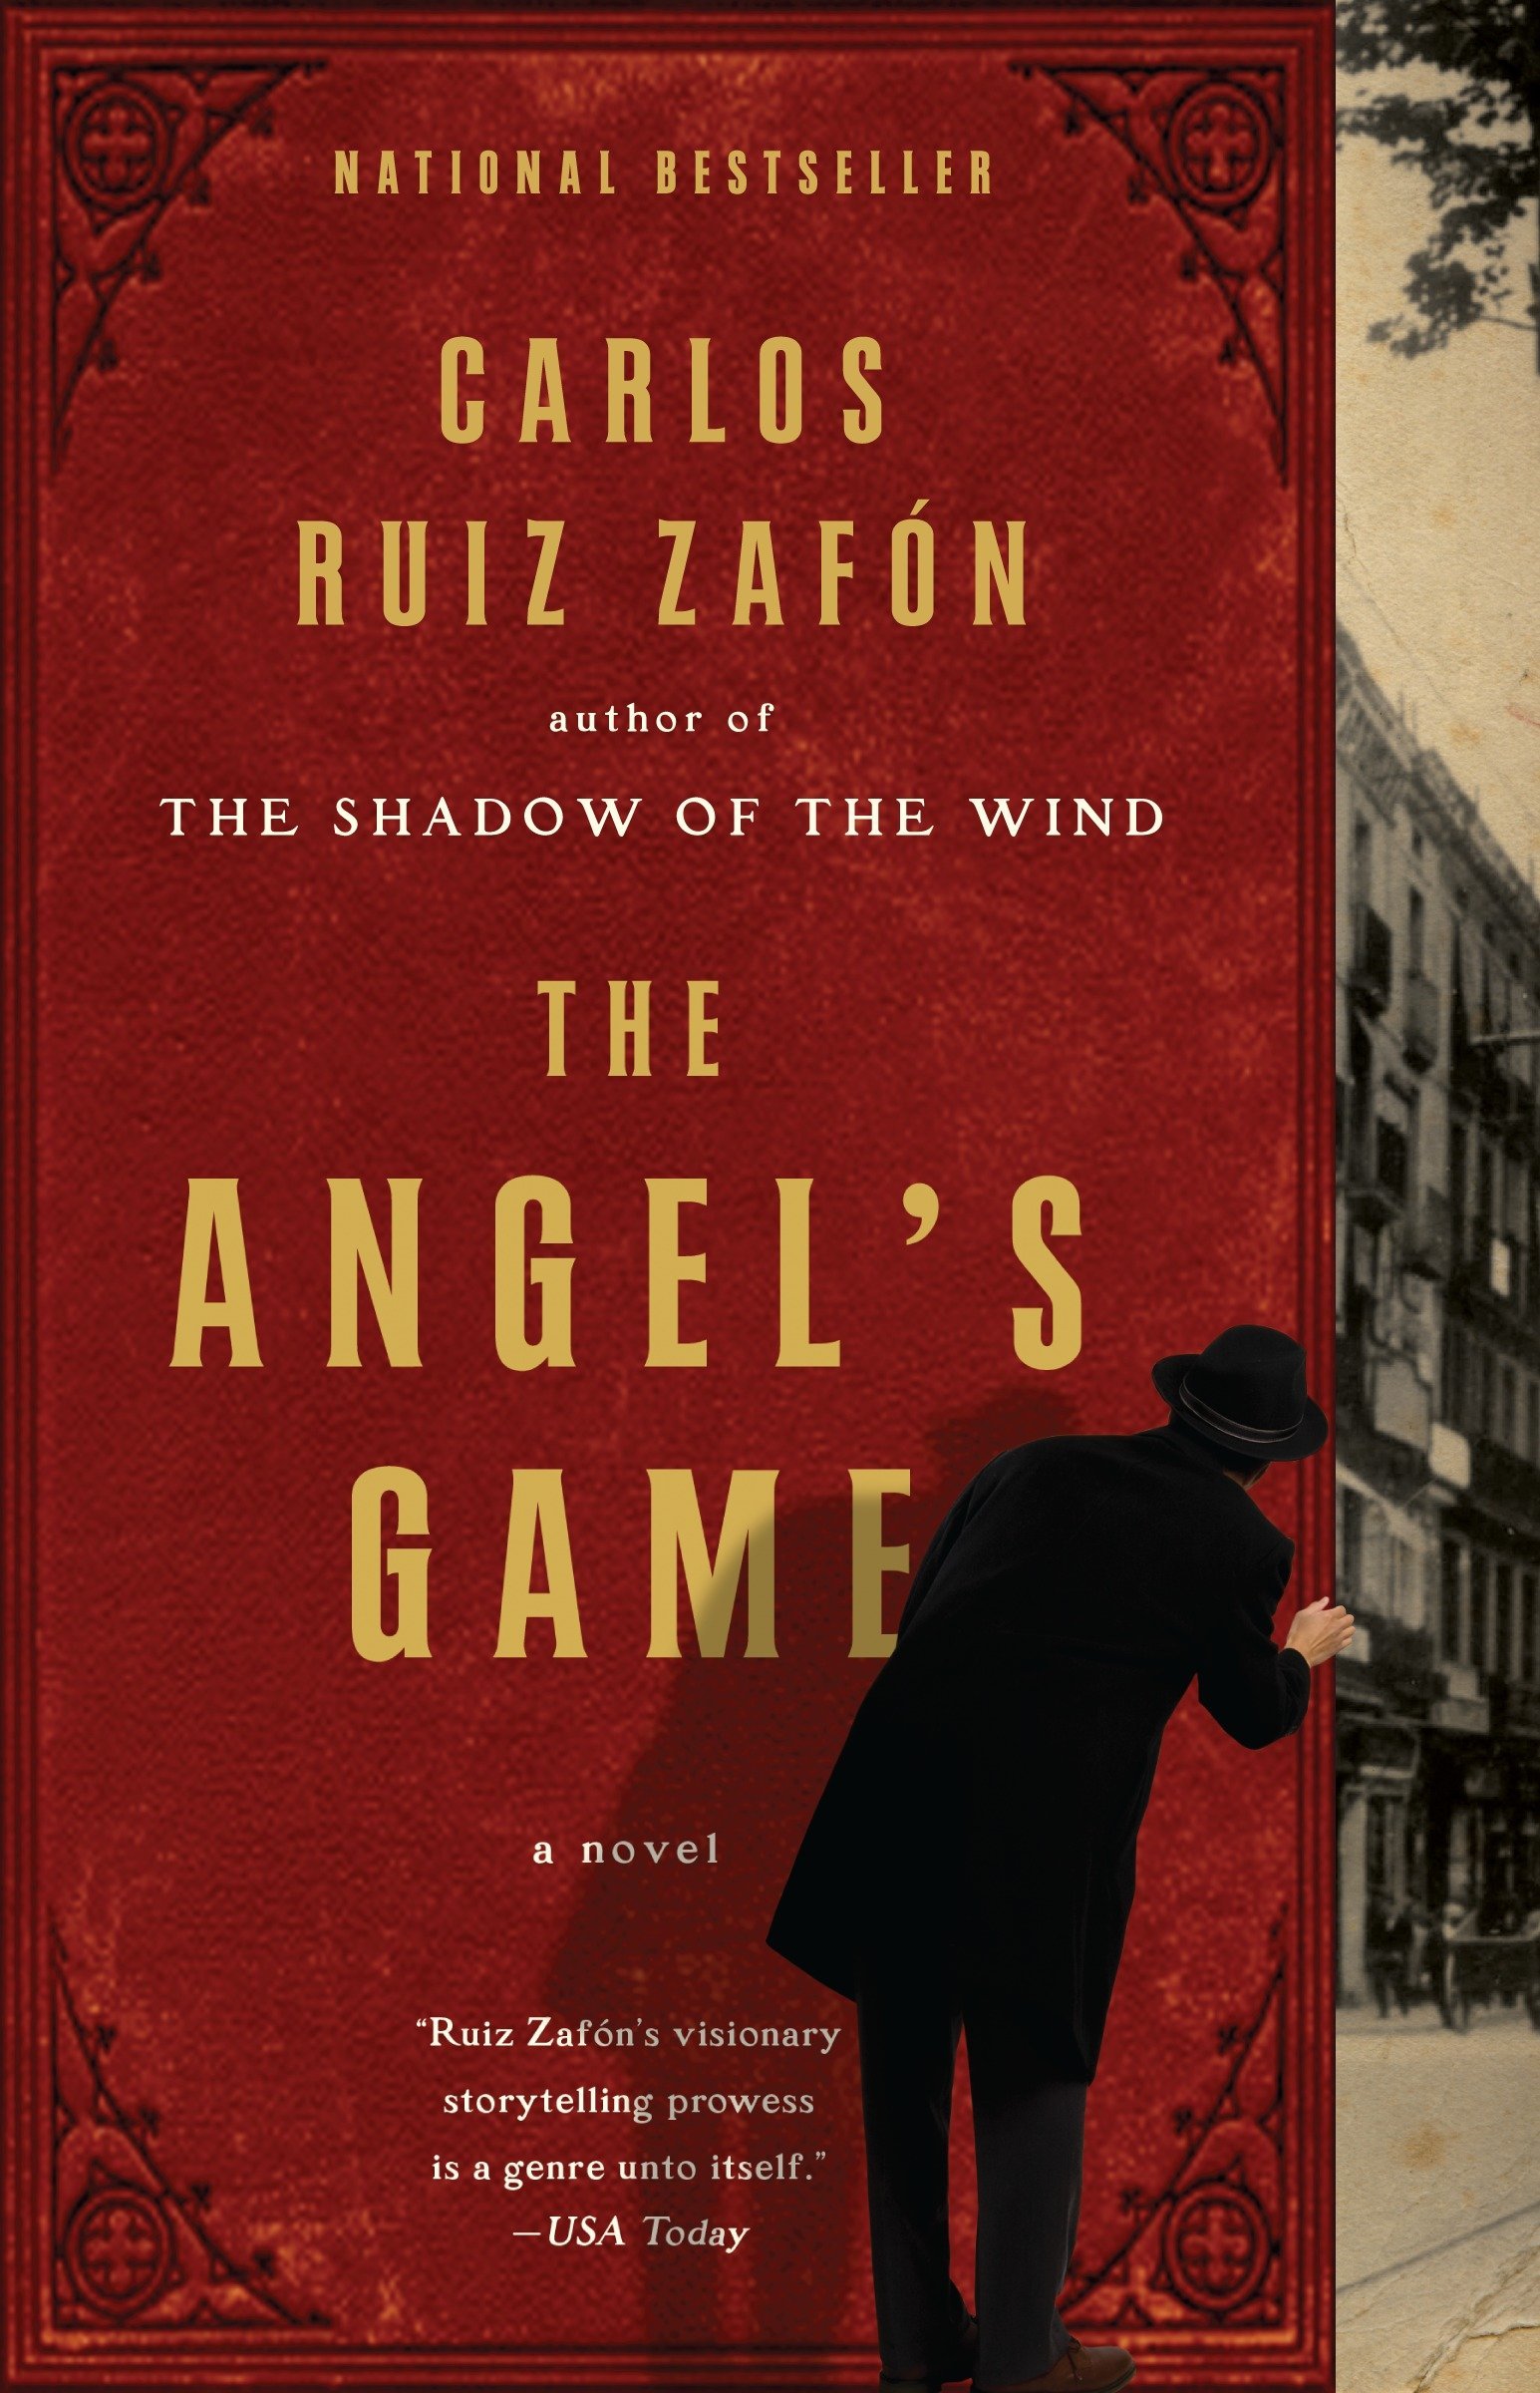 The Angel's Game by Carlos Ruiz-Zafon